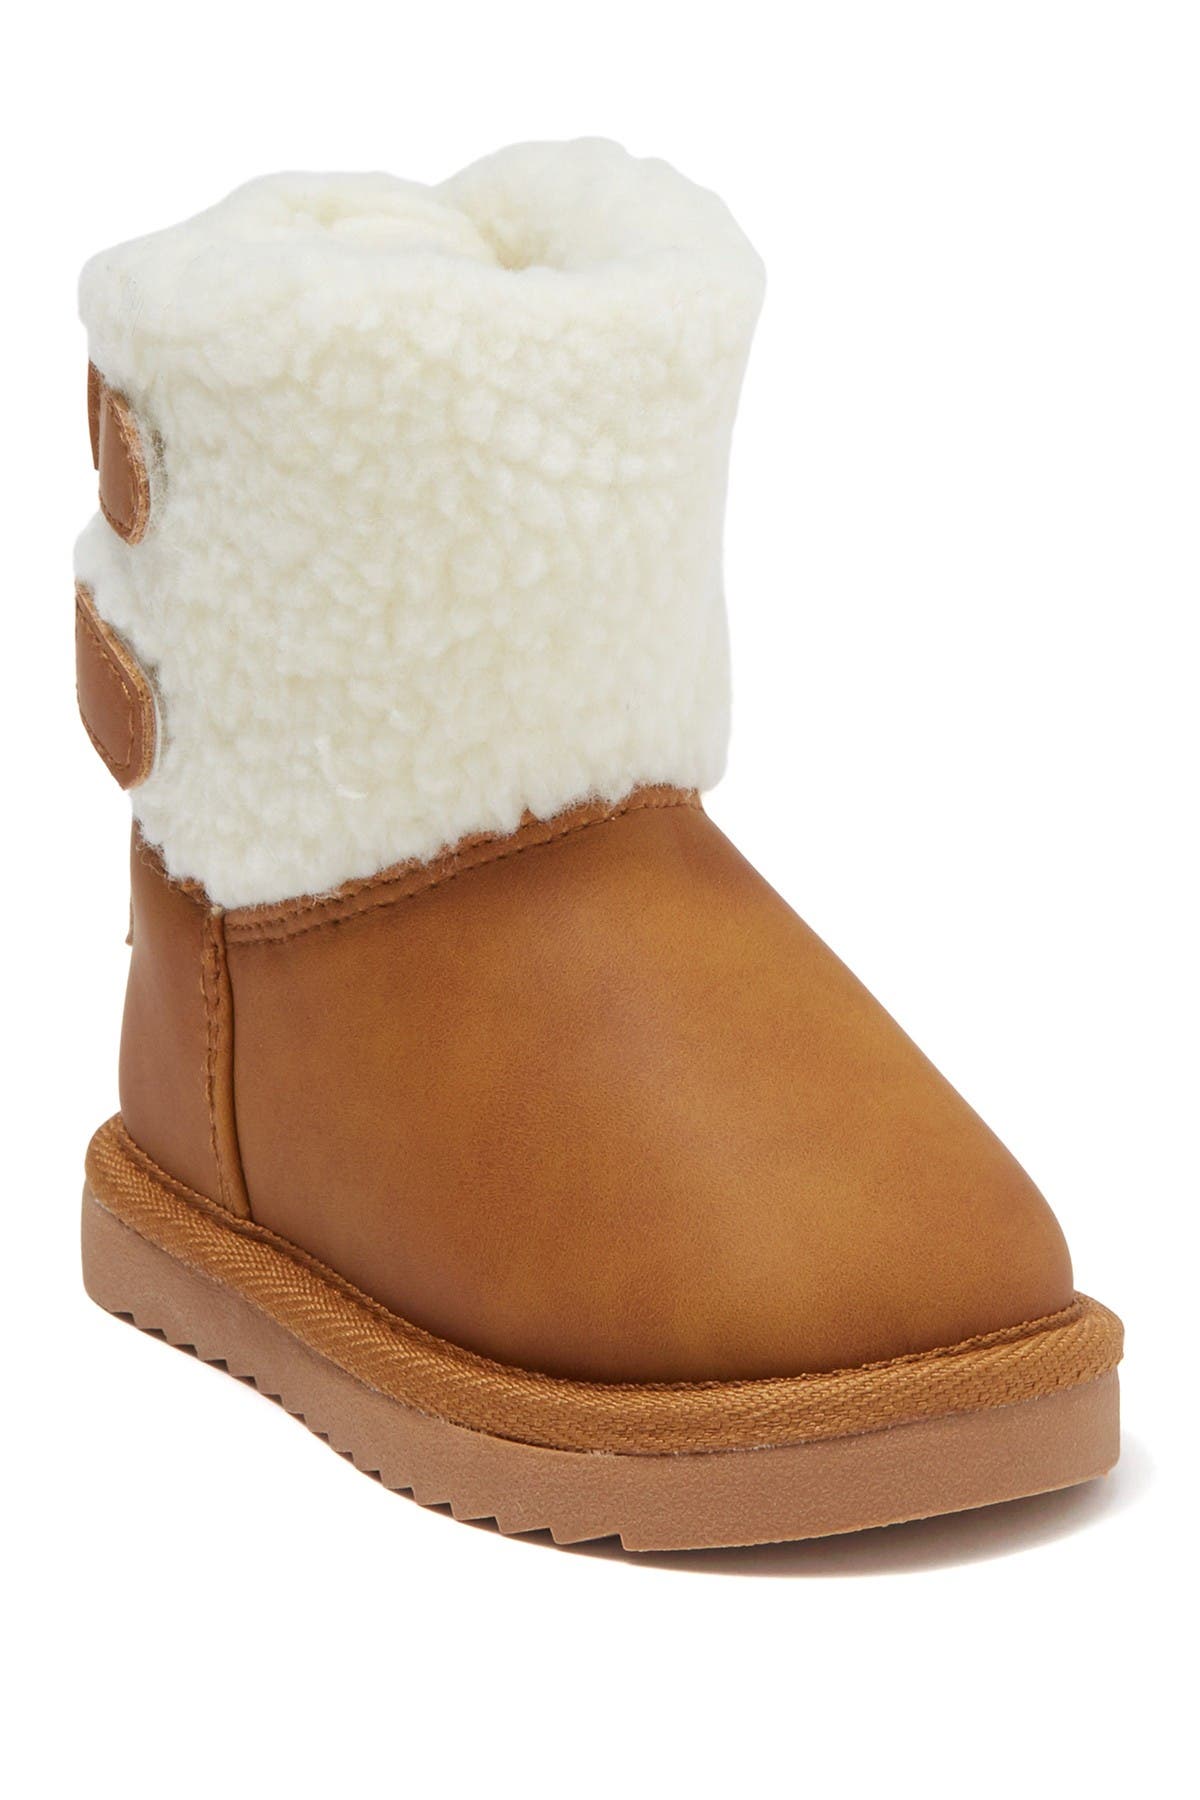 bebe winter boots